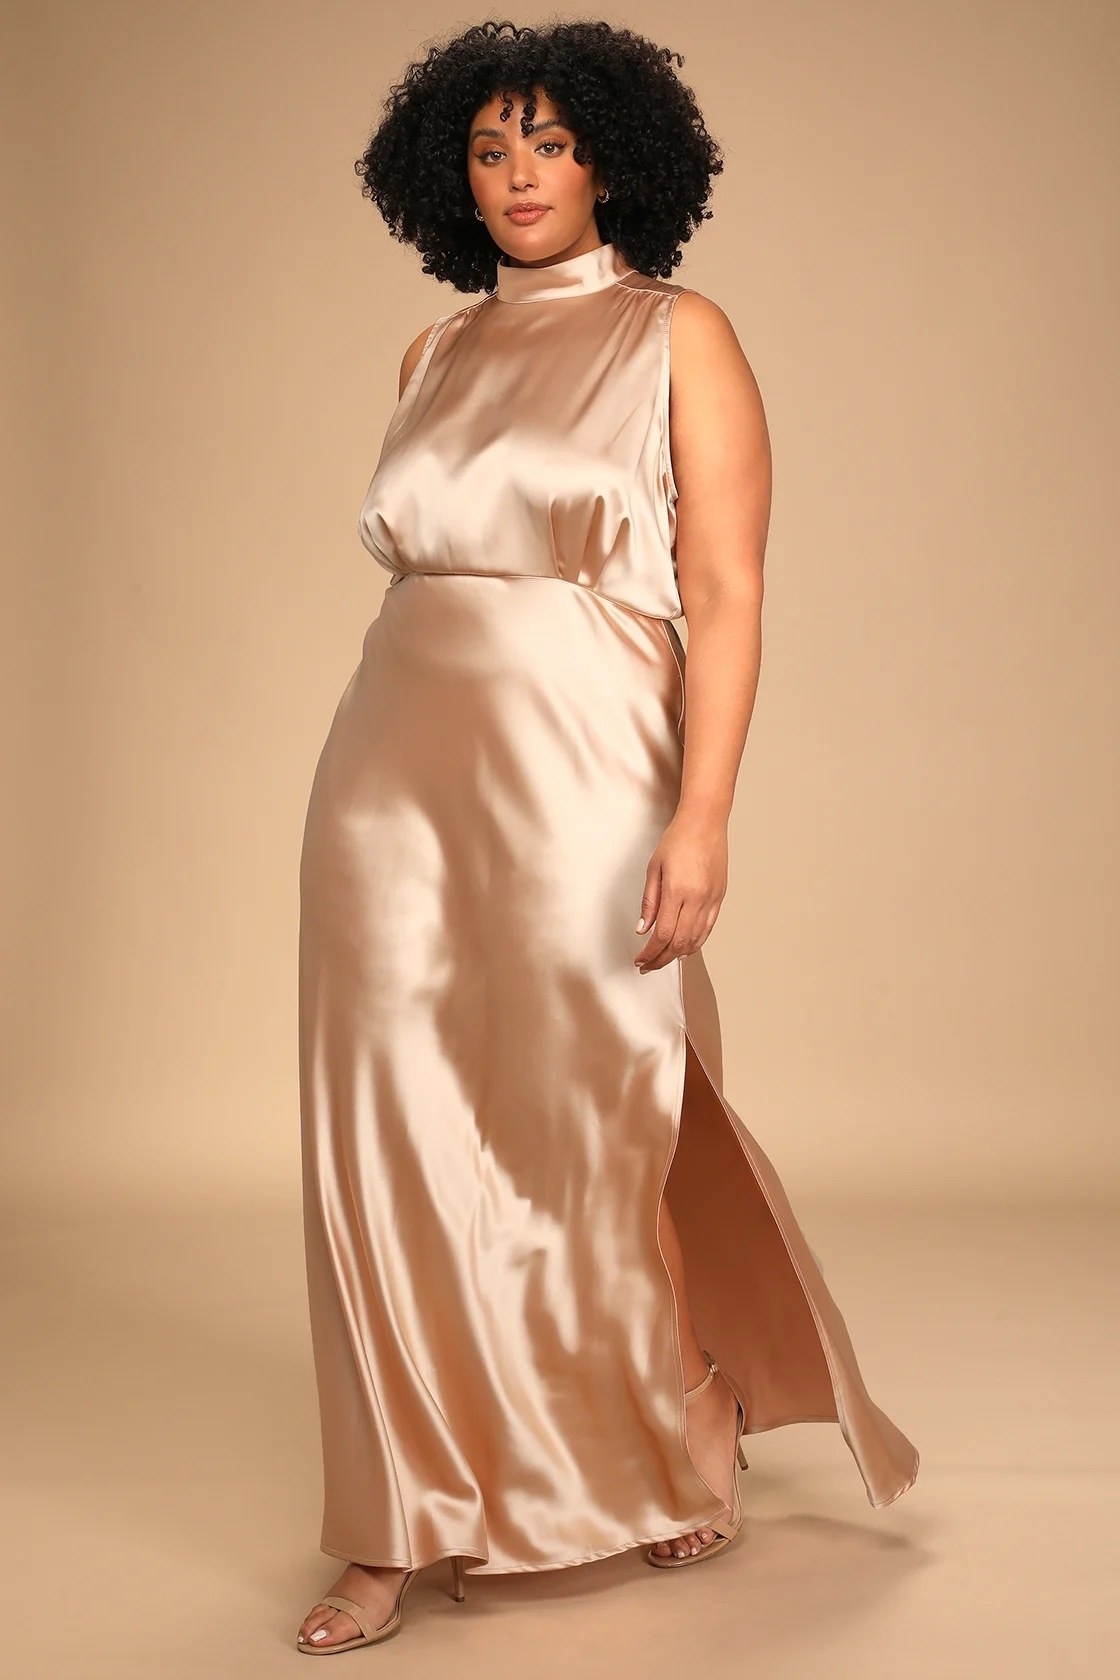 A model wearing a champagne dress